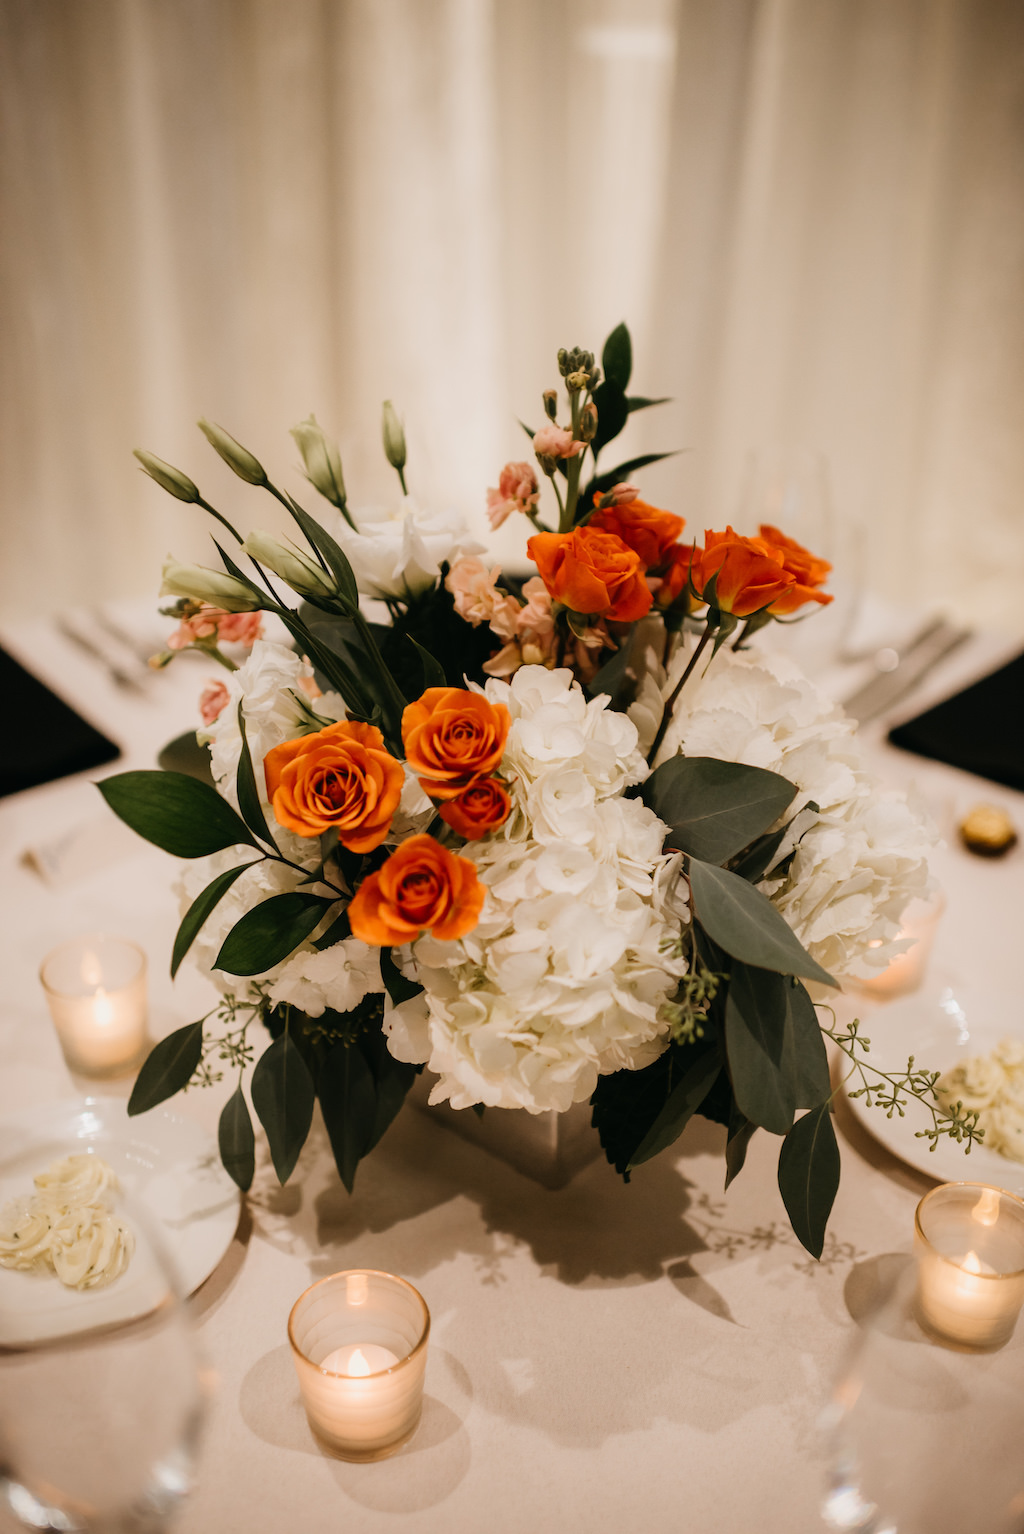 Old Florida Inspired Wedding Reception Decor, White Hydrangeas, Orange and Greenery Floral Centerpiece, Votive Candles